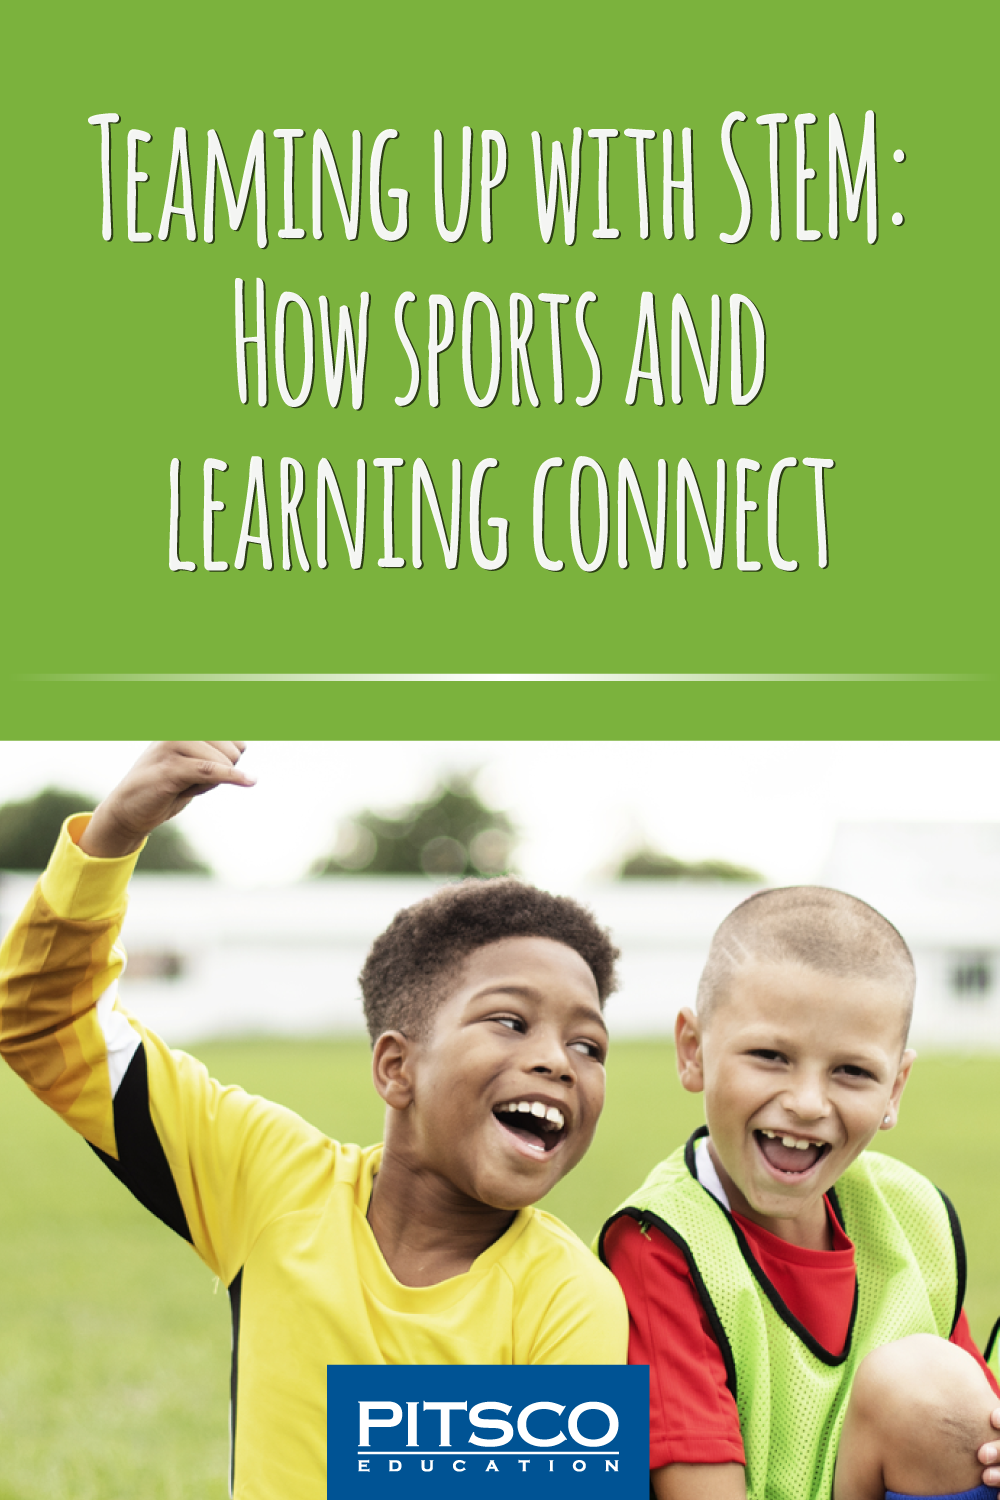 ▷ Bringing STEM education to life through sports